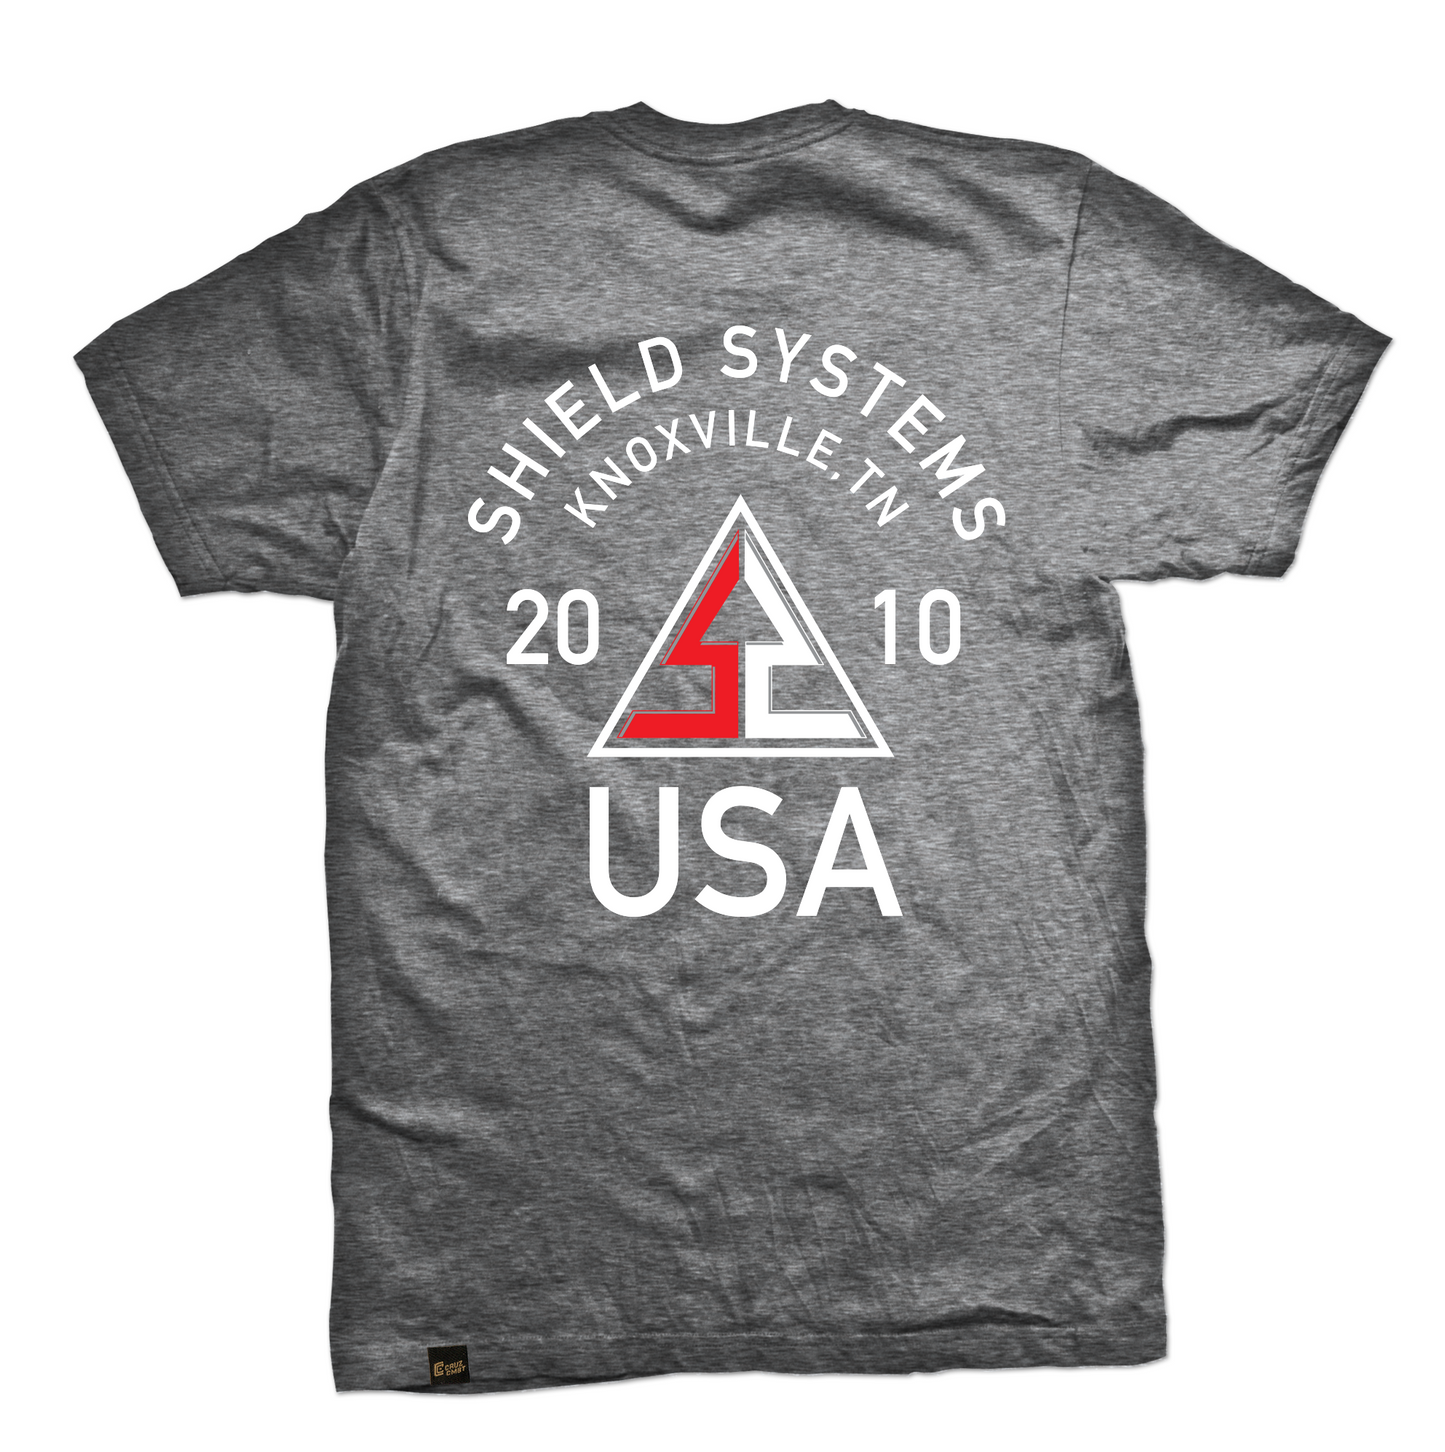 Shield Systems tee Badge, athl. grey